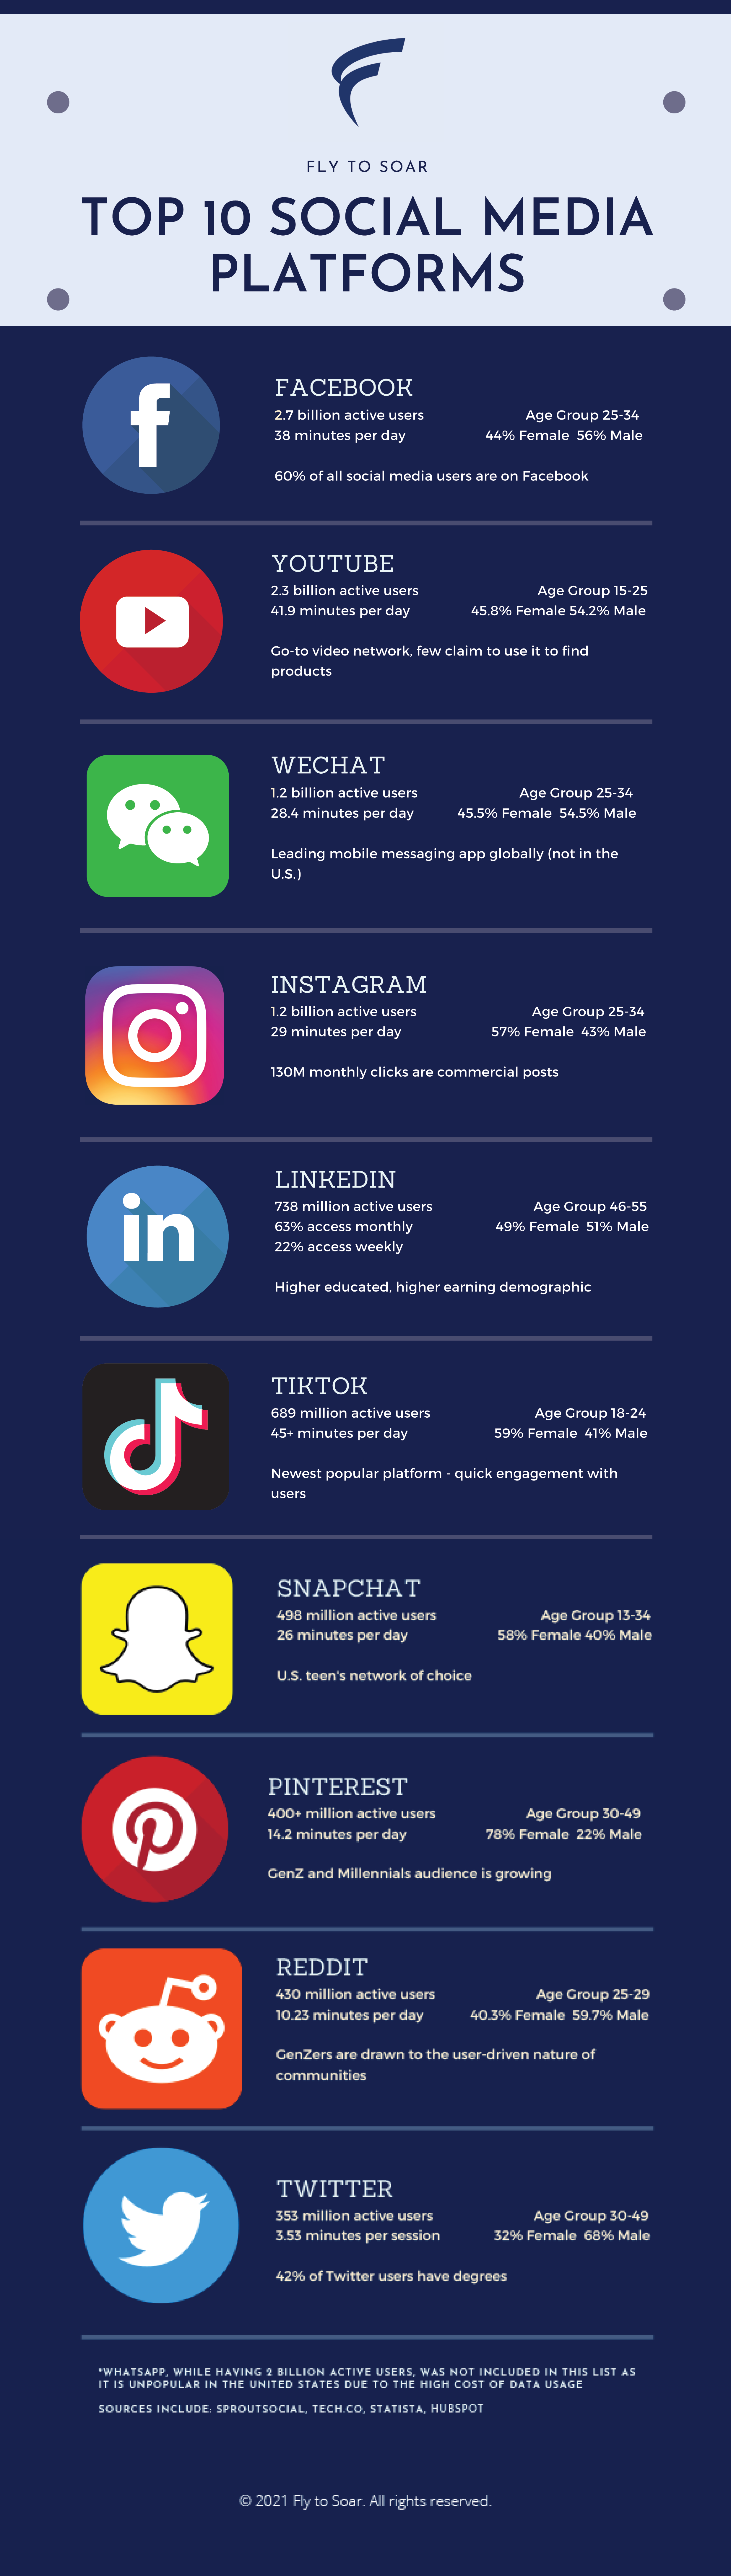 Top 10 Social Media Platforms List Infographic — Fly To Soar